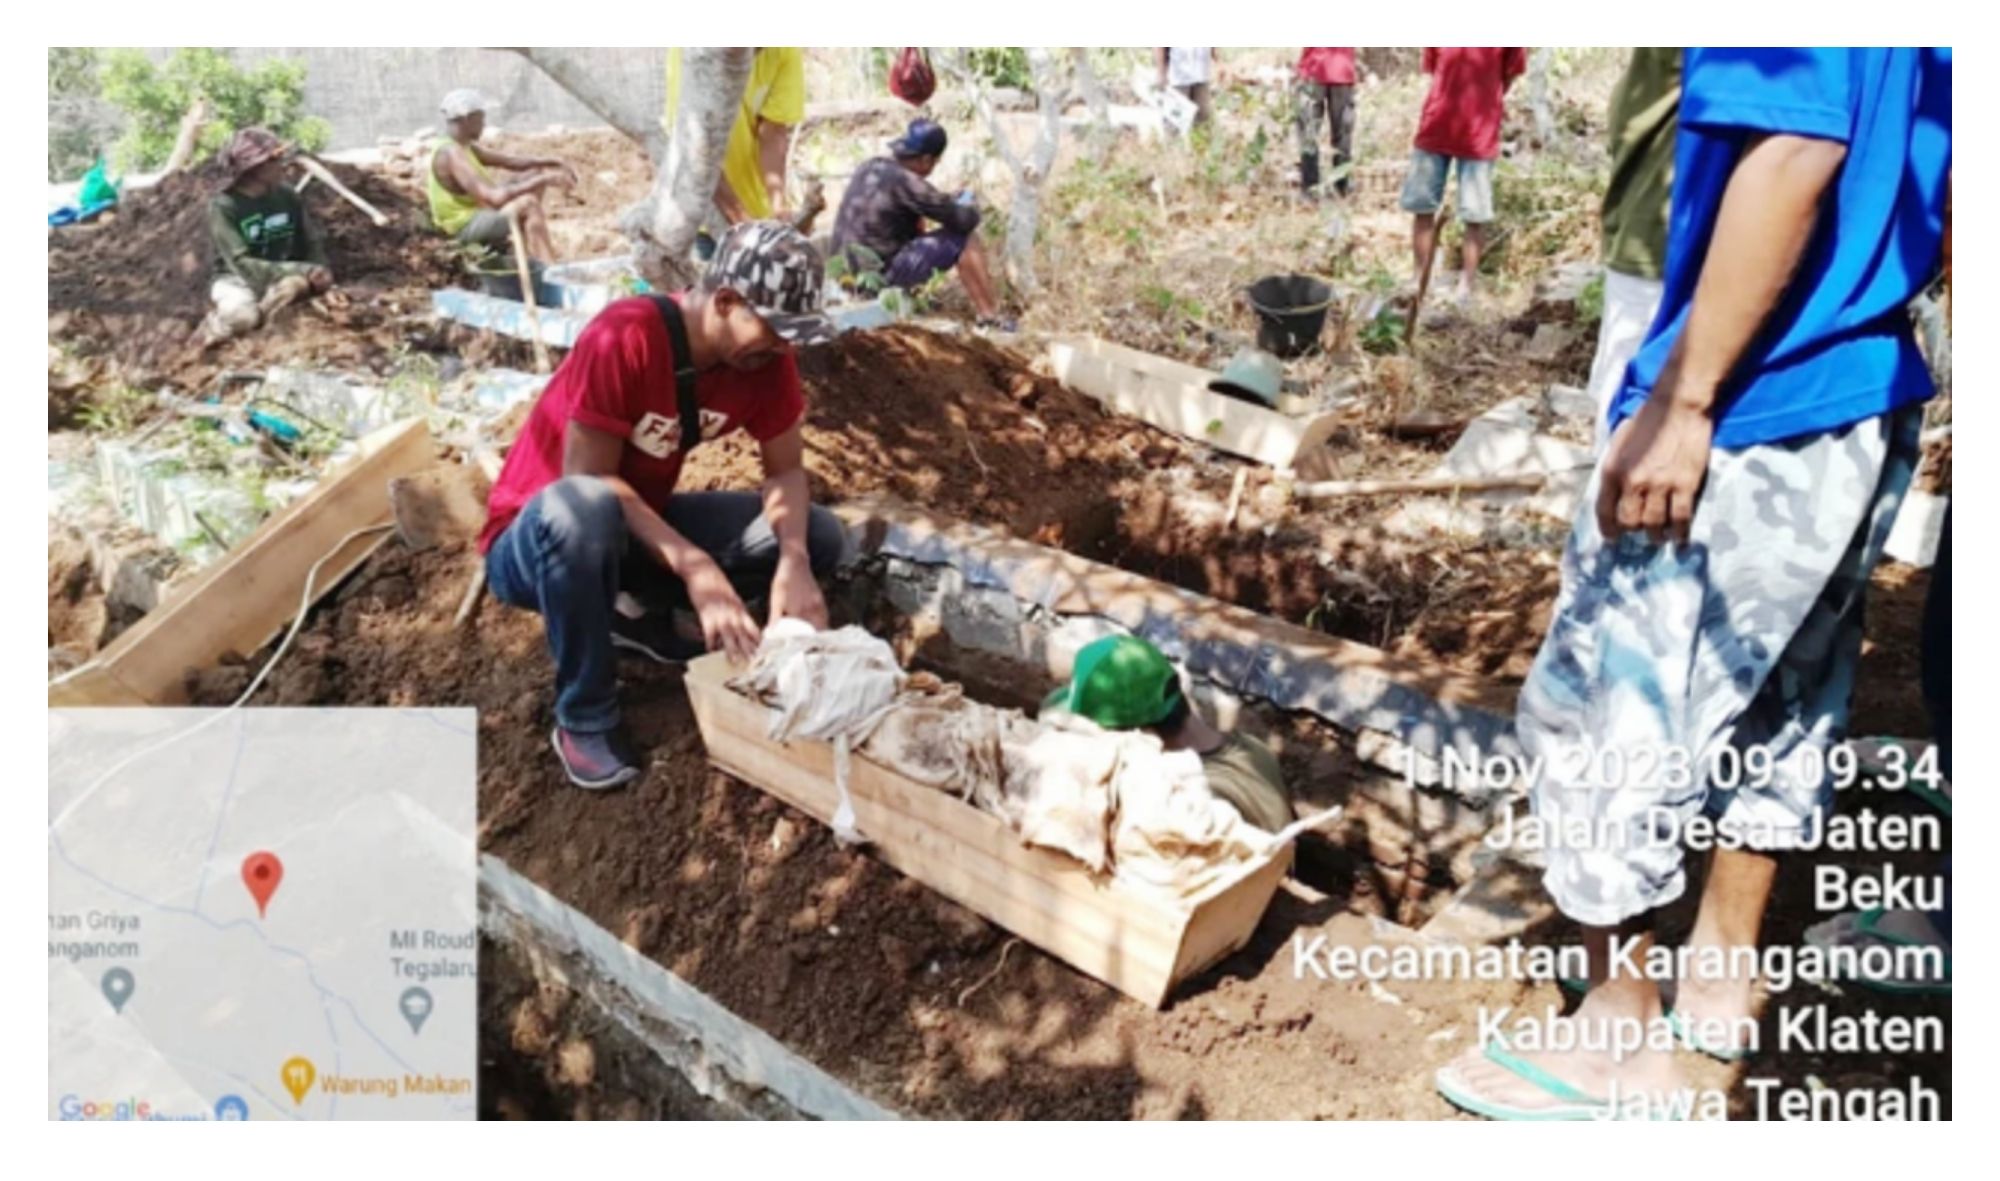 Didapatkannya jenazah yang masih utuh ketika ada penggalian kubur untuk dipindahkan ke tempat lain terdampak tol Desa Brangkal, Kecamatan Karanganom, Kabupaten Klaten pada awal bulan lalu.